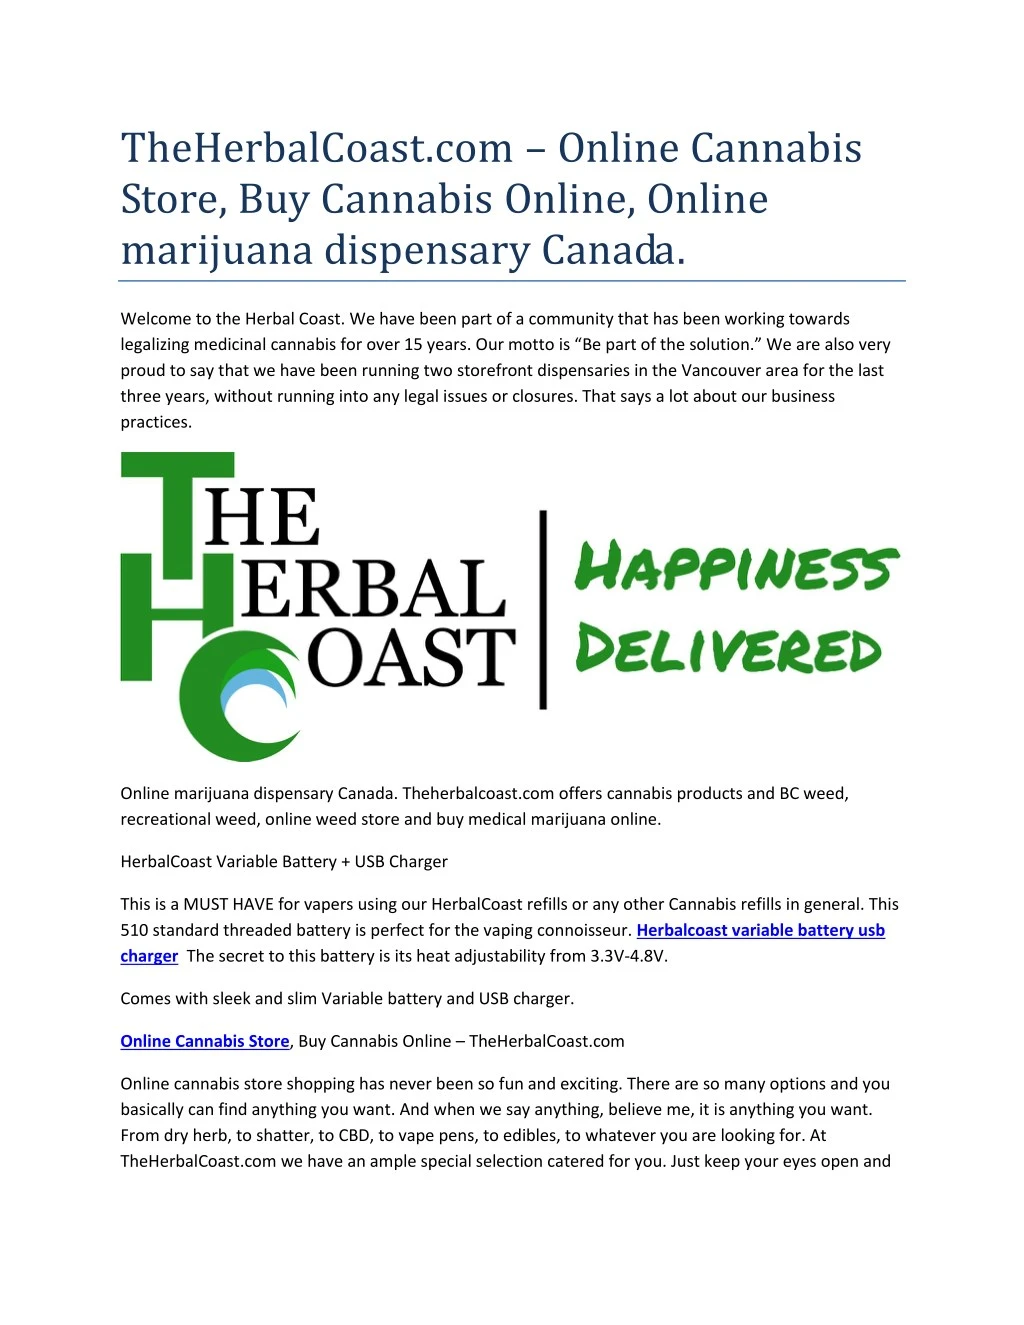 theherbalcoast com online cannabis store